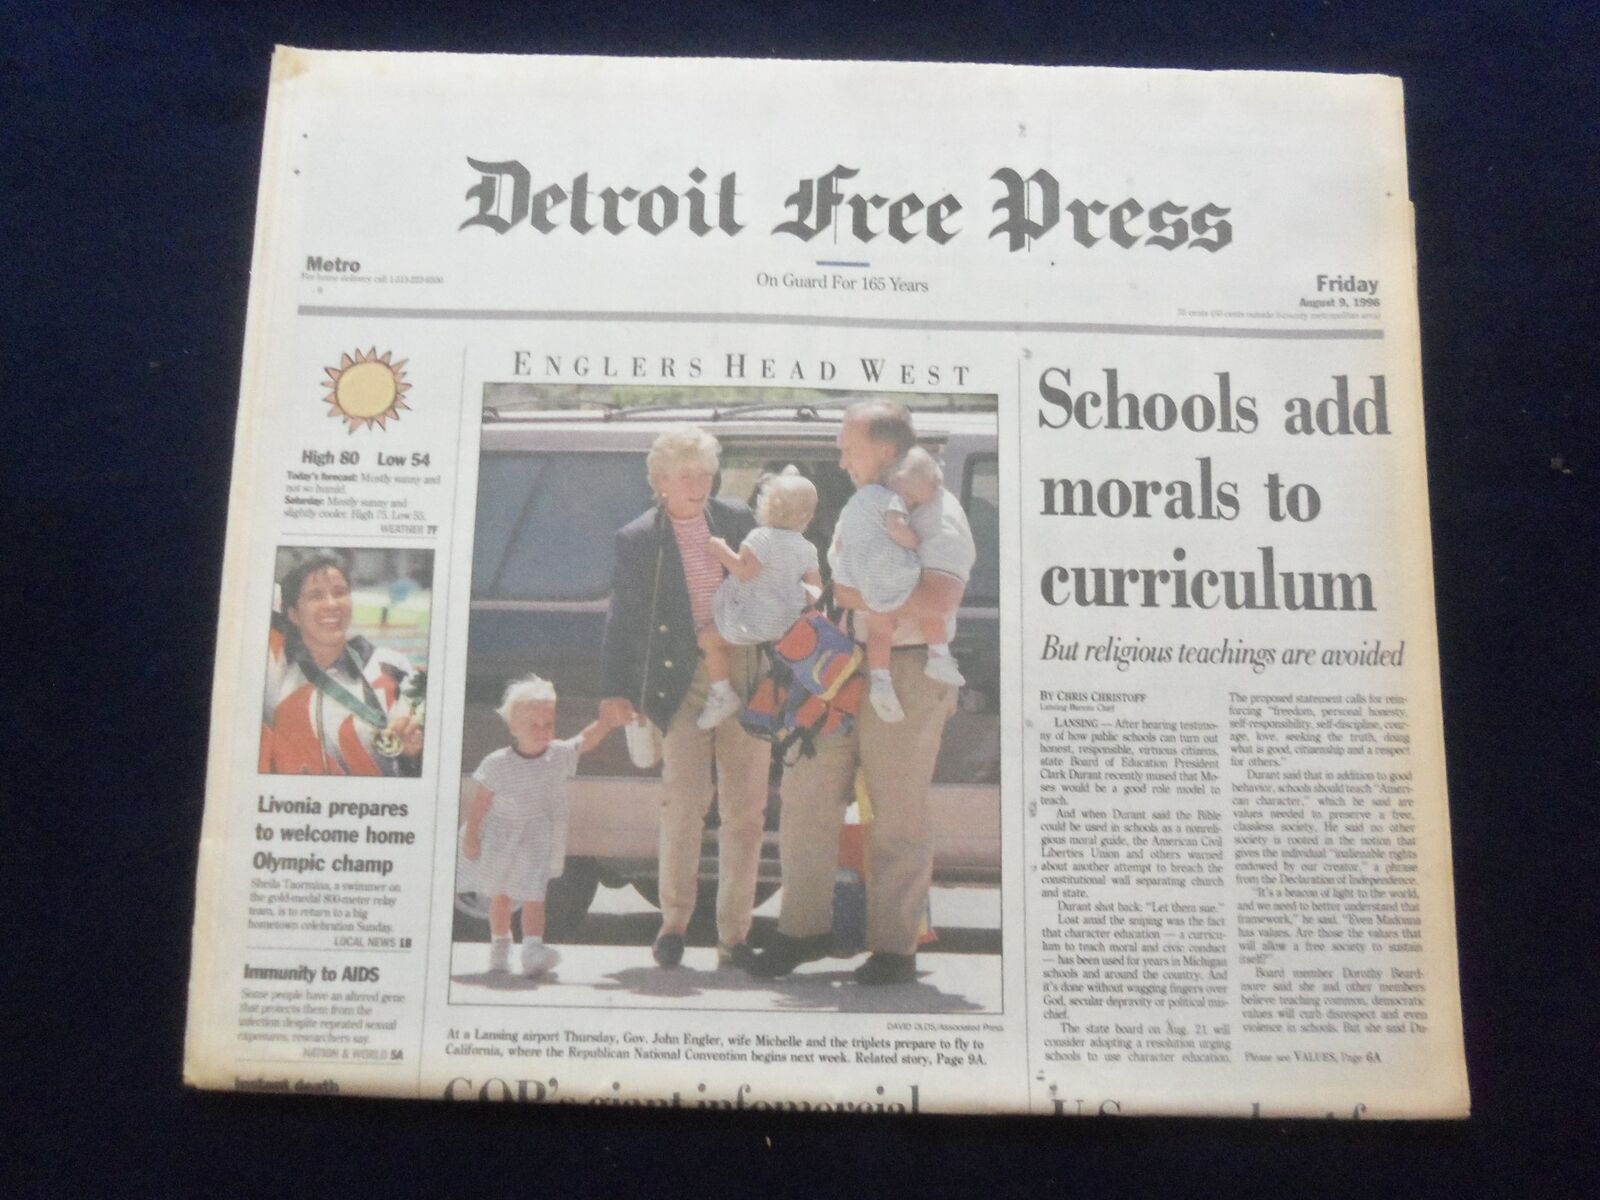 1996 AUG 9 DETROIT FREE PRESS NEWSPAPER -SCHOOLS ADD CURRICULUM MORALS - NP 7270